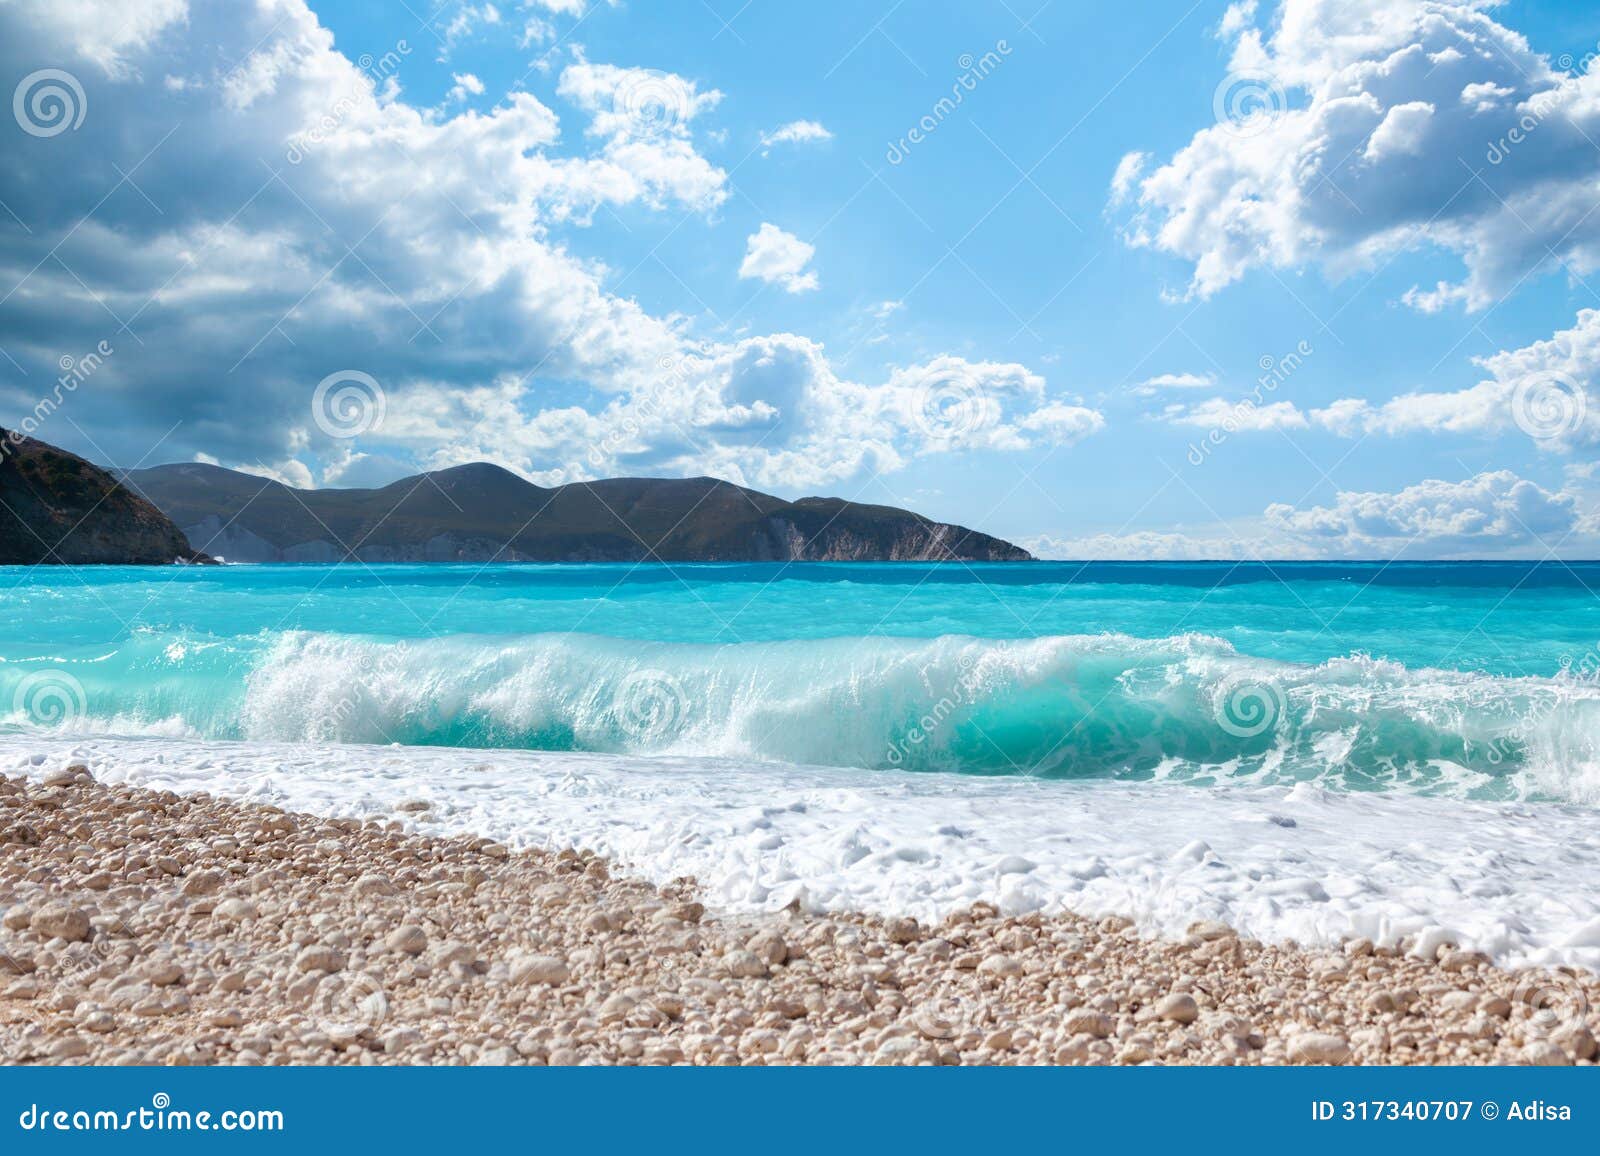 myrtos beach, kefalonia, greece